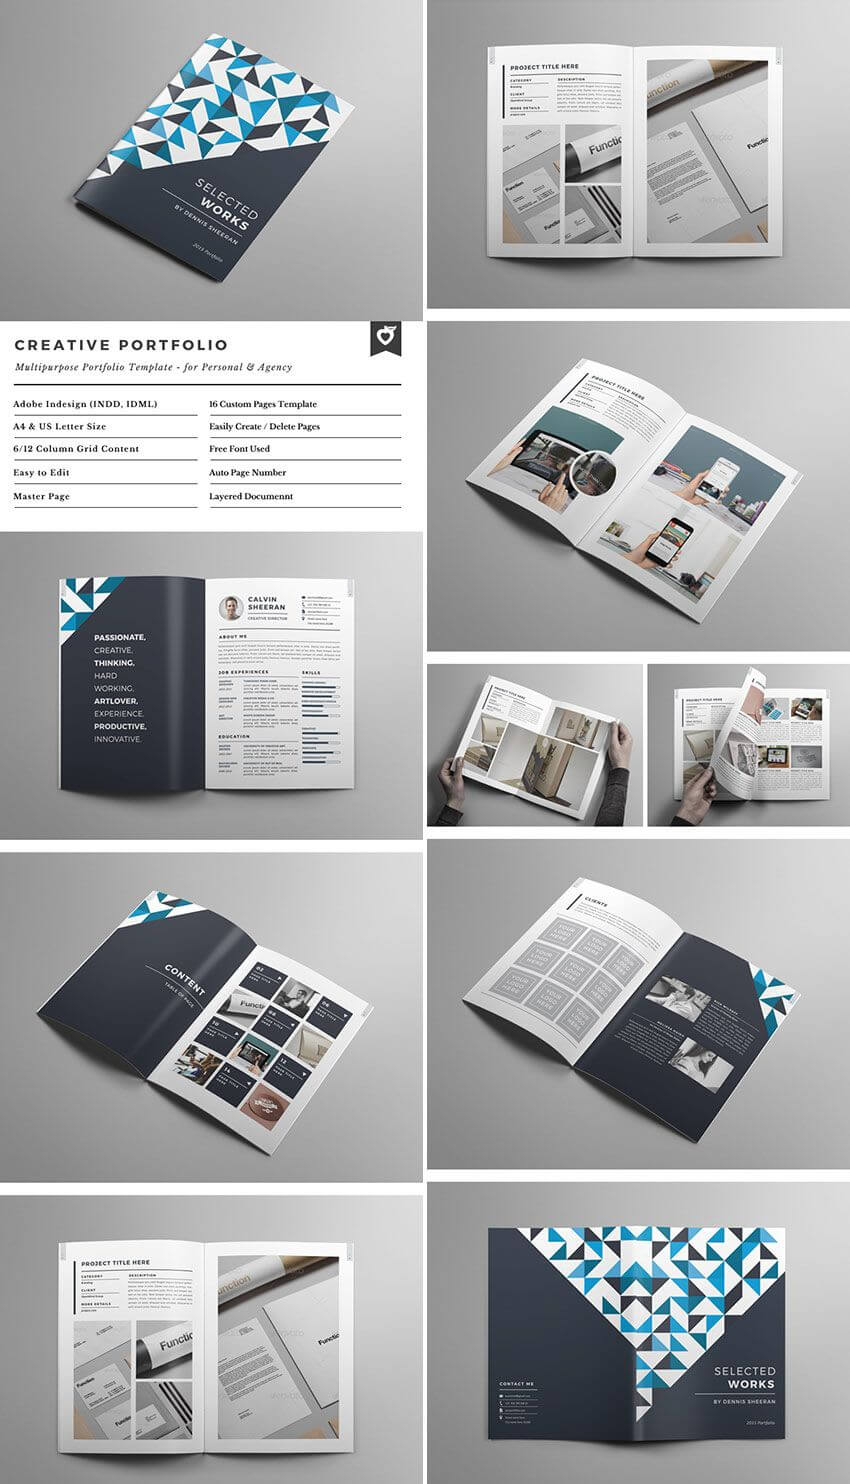 Creative Portfolio Brochure Indd | Indesign Brochure Intended For Adobe Indesign Brochure Templates